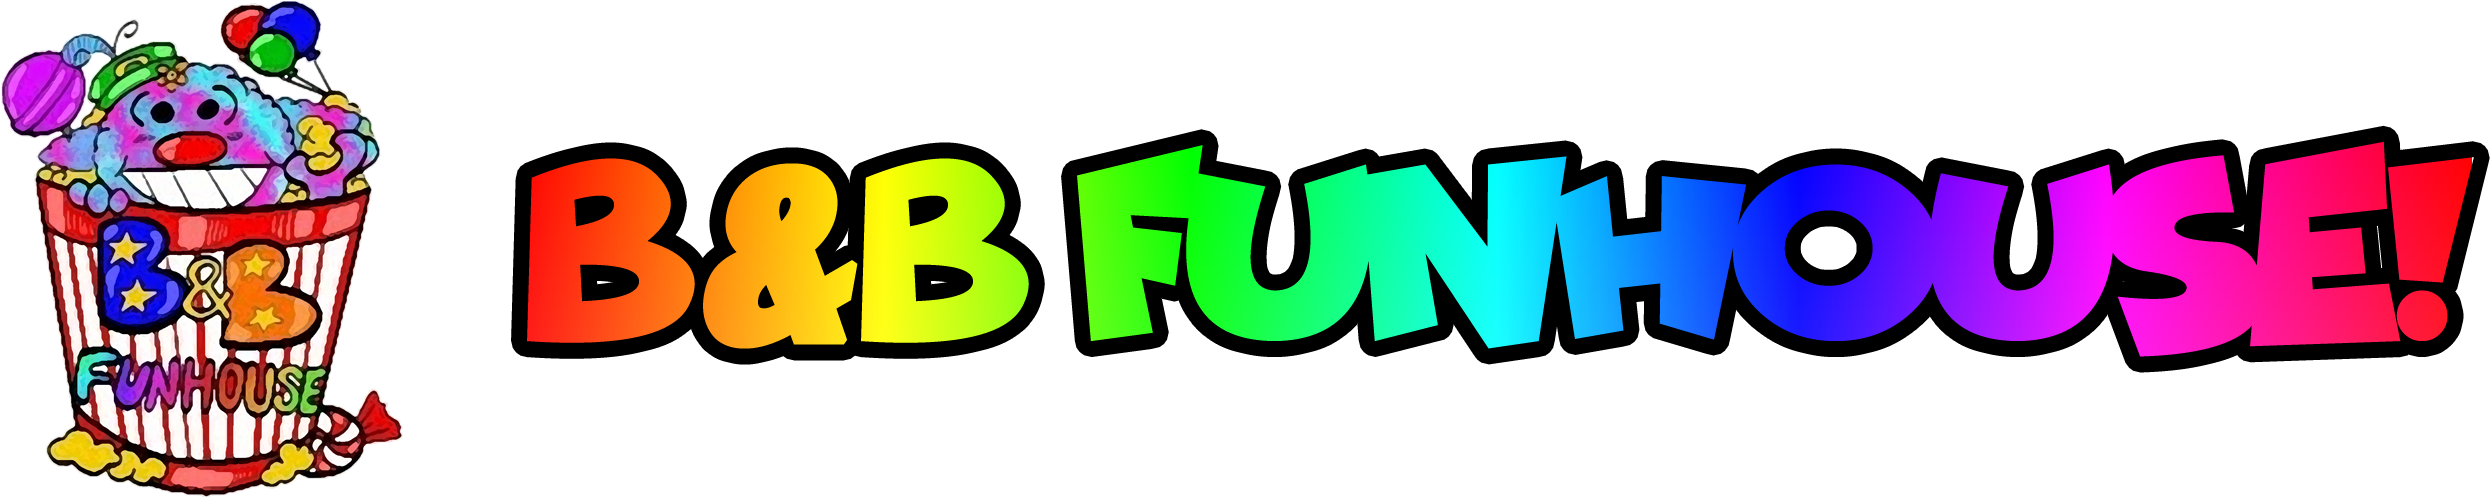 B&b Fun House B&b Fun House Brings Fun, Laughter And - Graphics (2500x500)